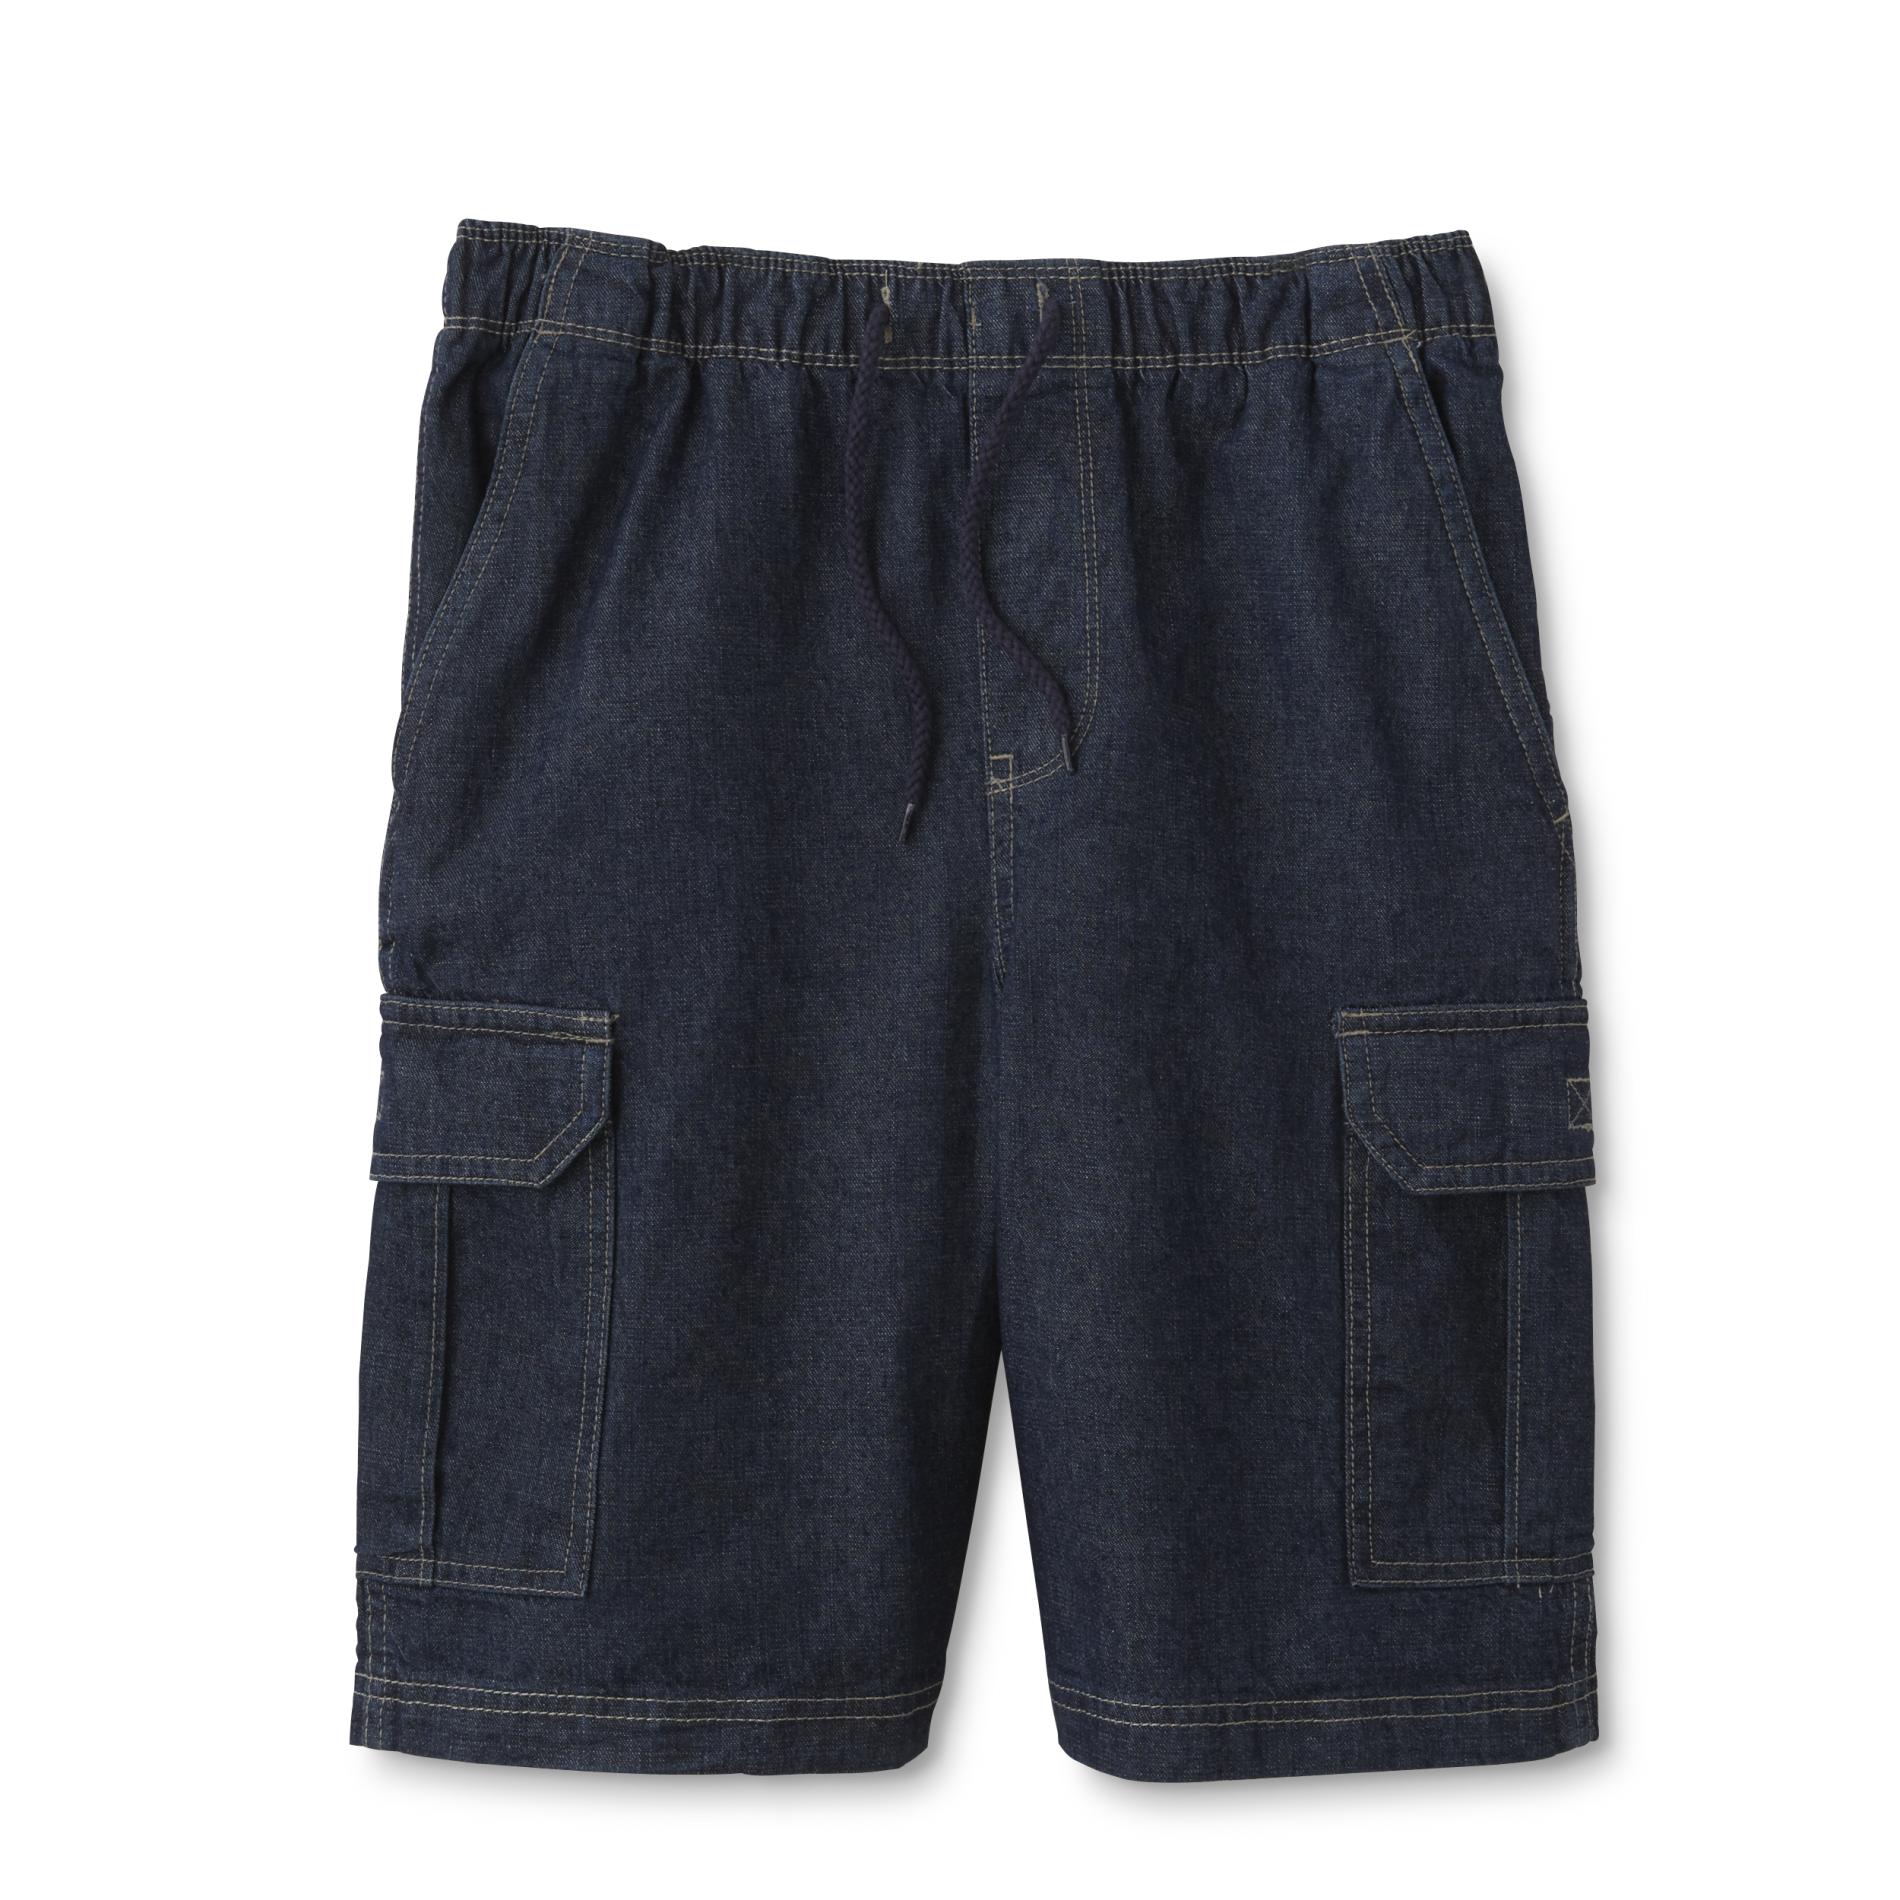 Simply Styled Boys' Cargo Shorts